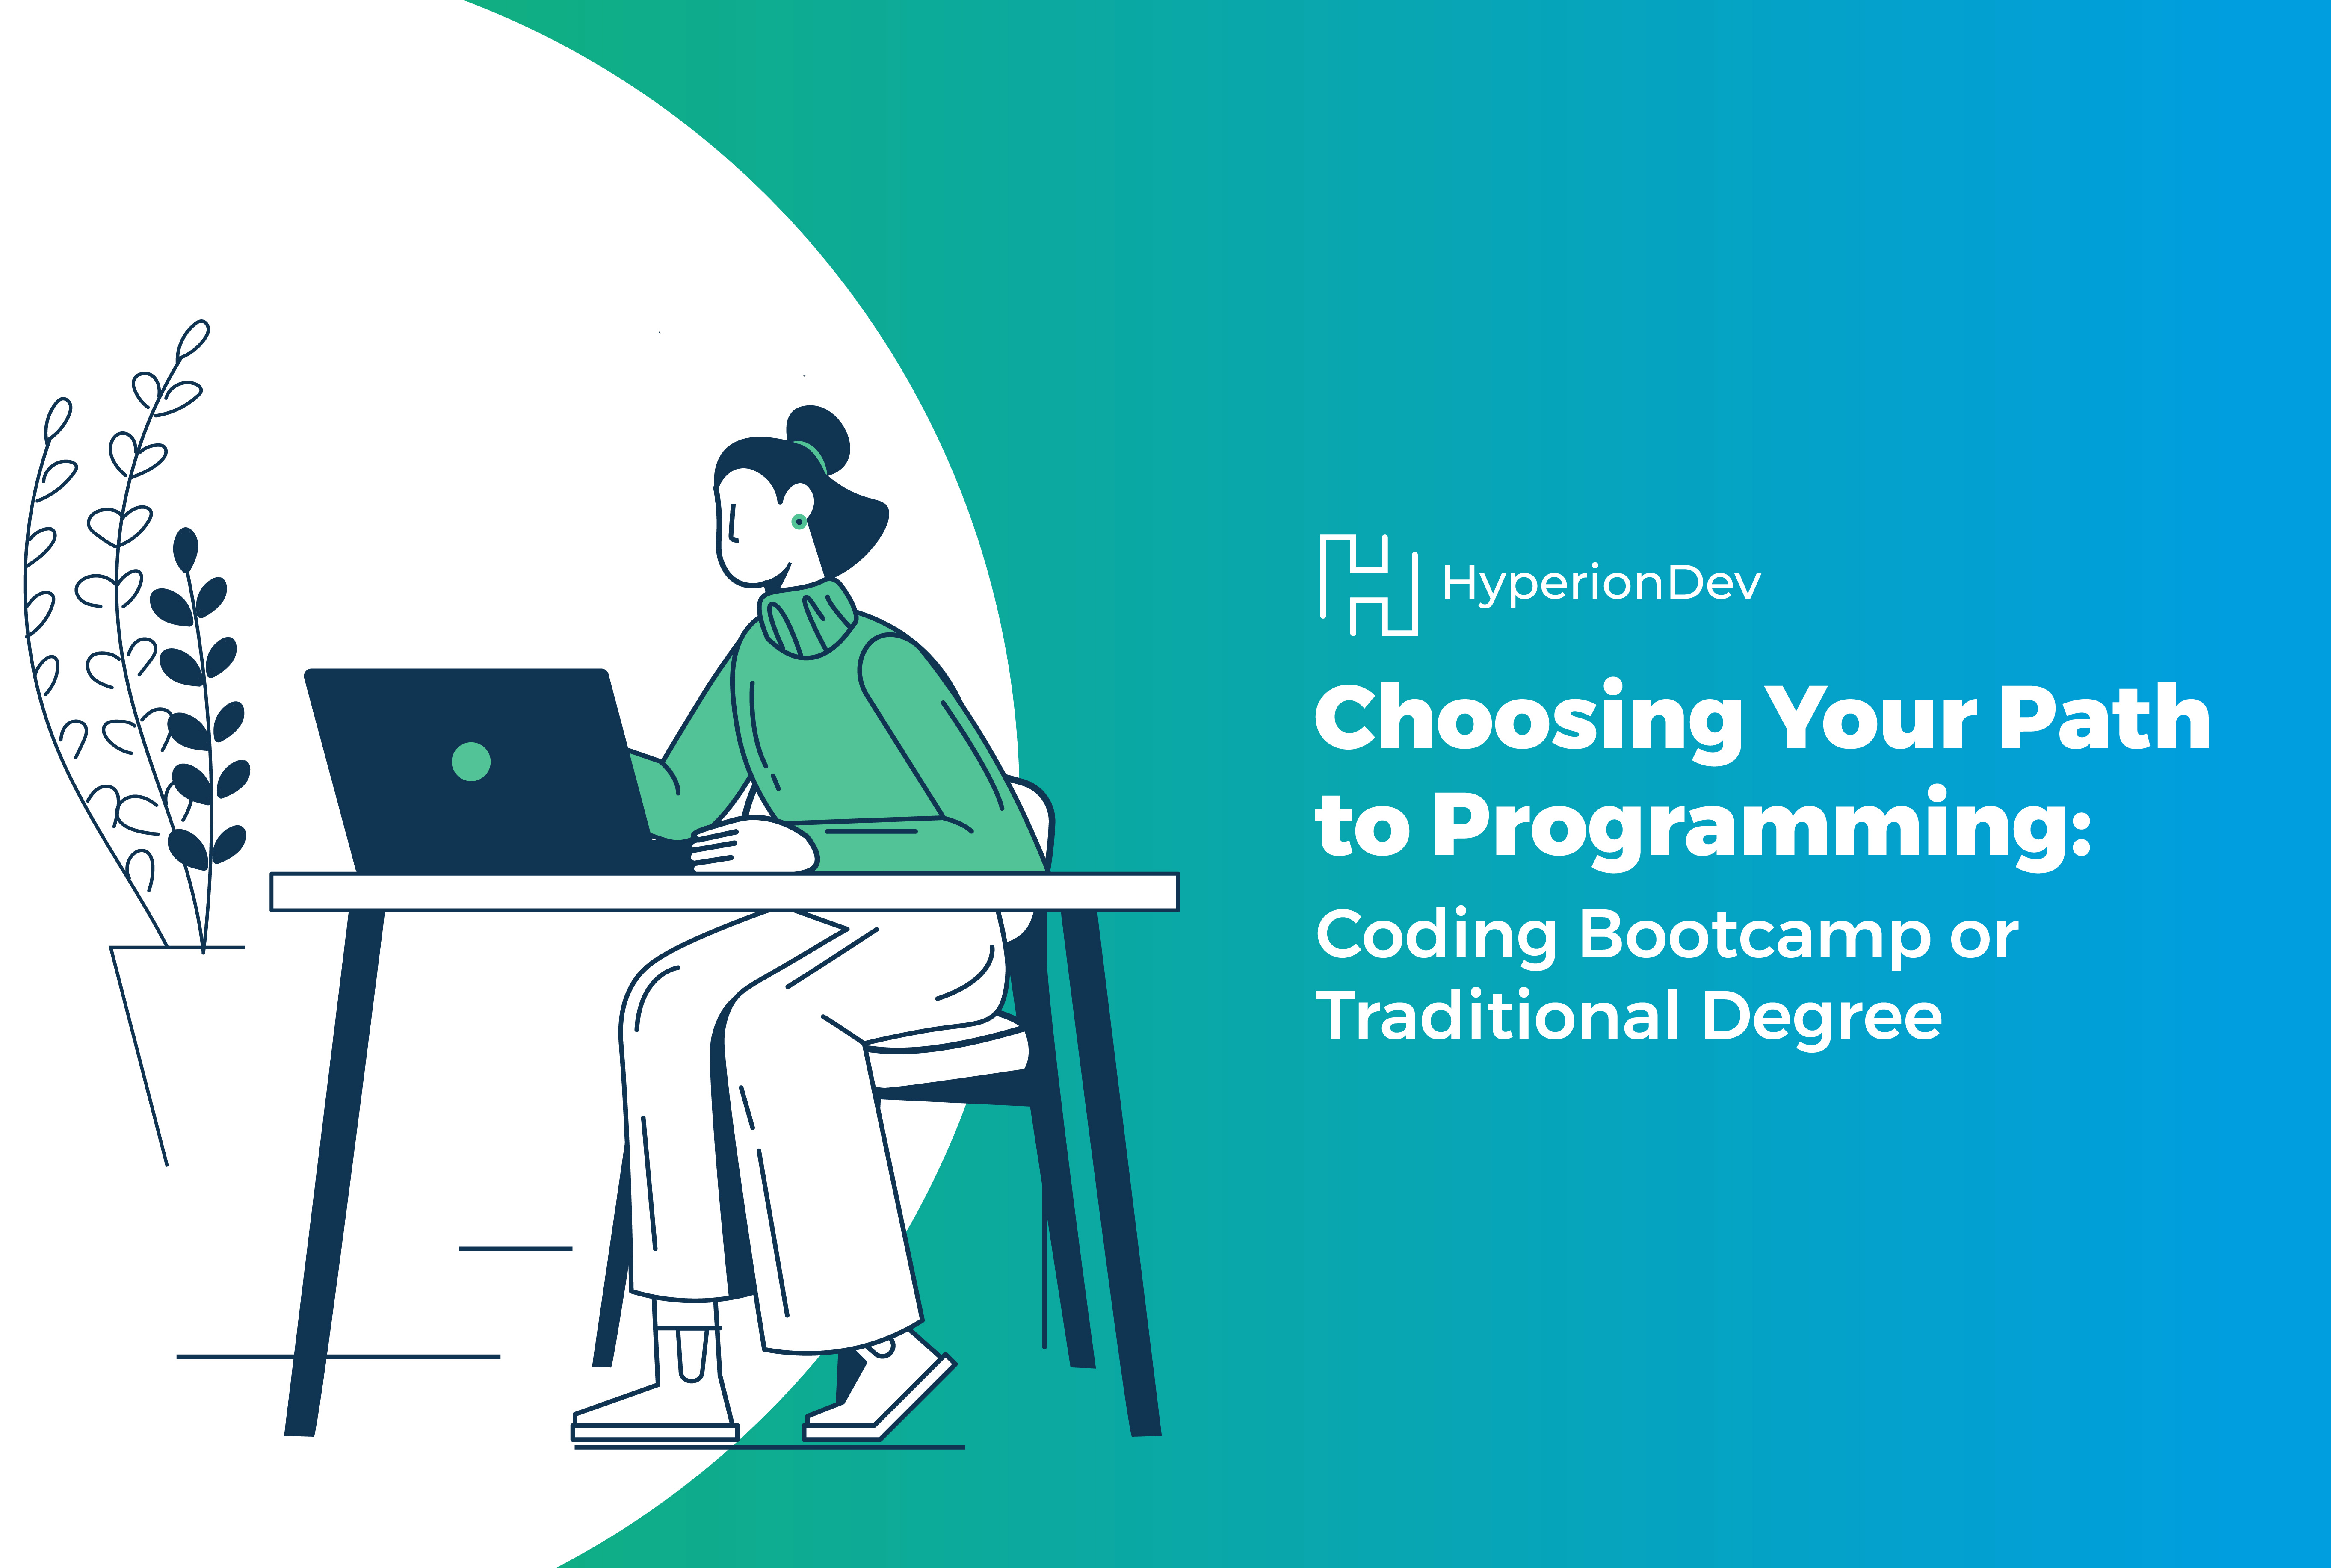 Coding bootcamp